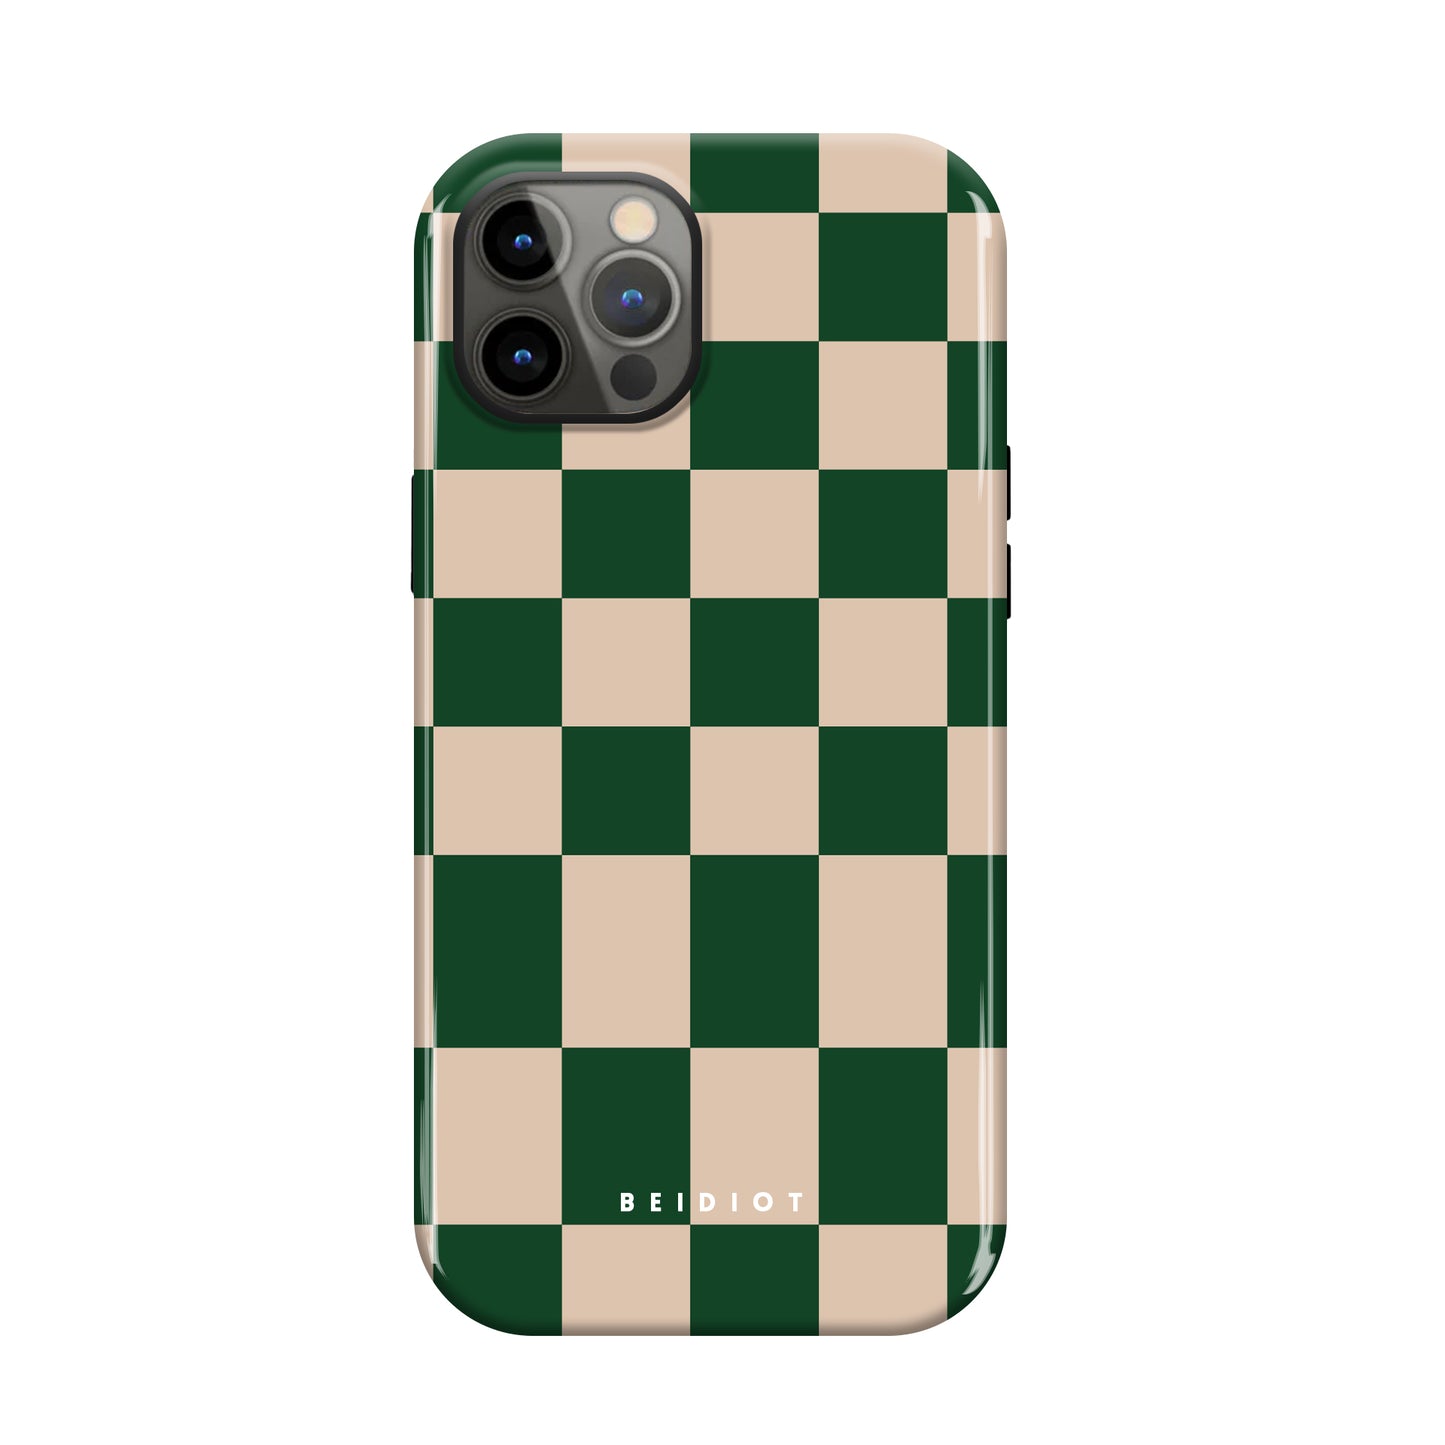 Emerald Chess iPhone Case